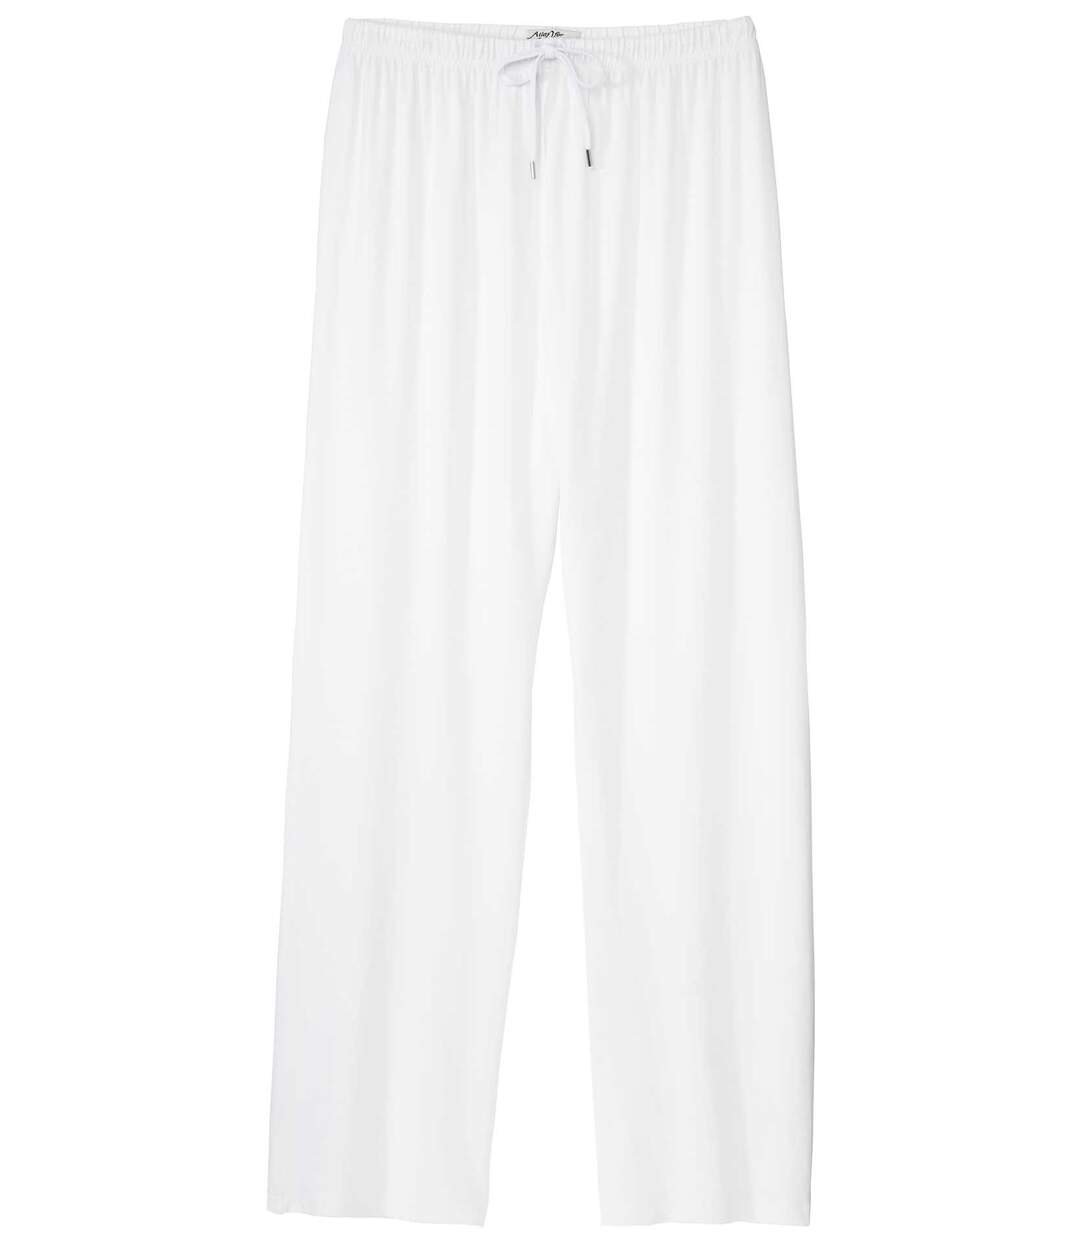 Pantalon Blanc Femme Fluide Ultra-Confort Atlas For Men